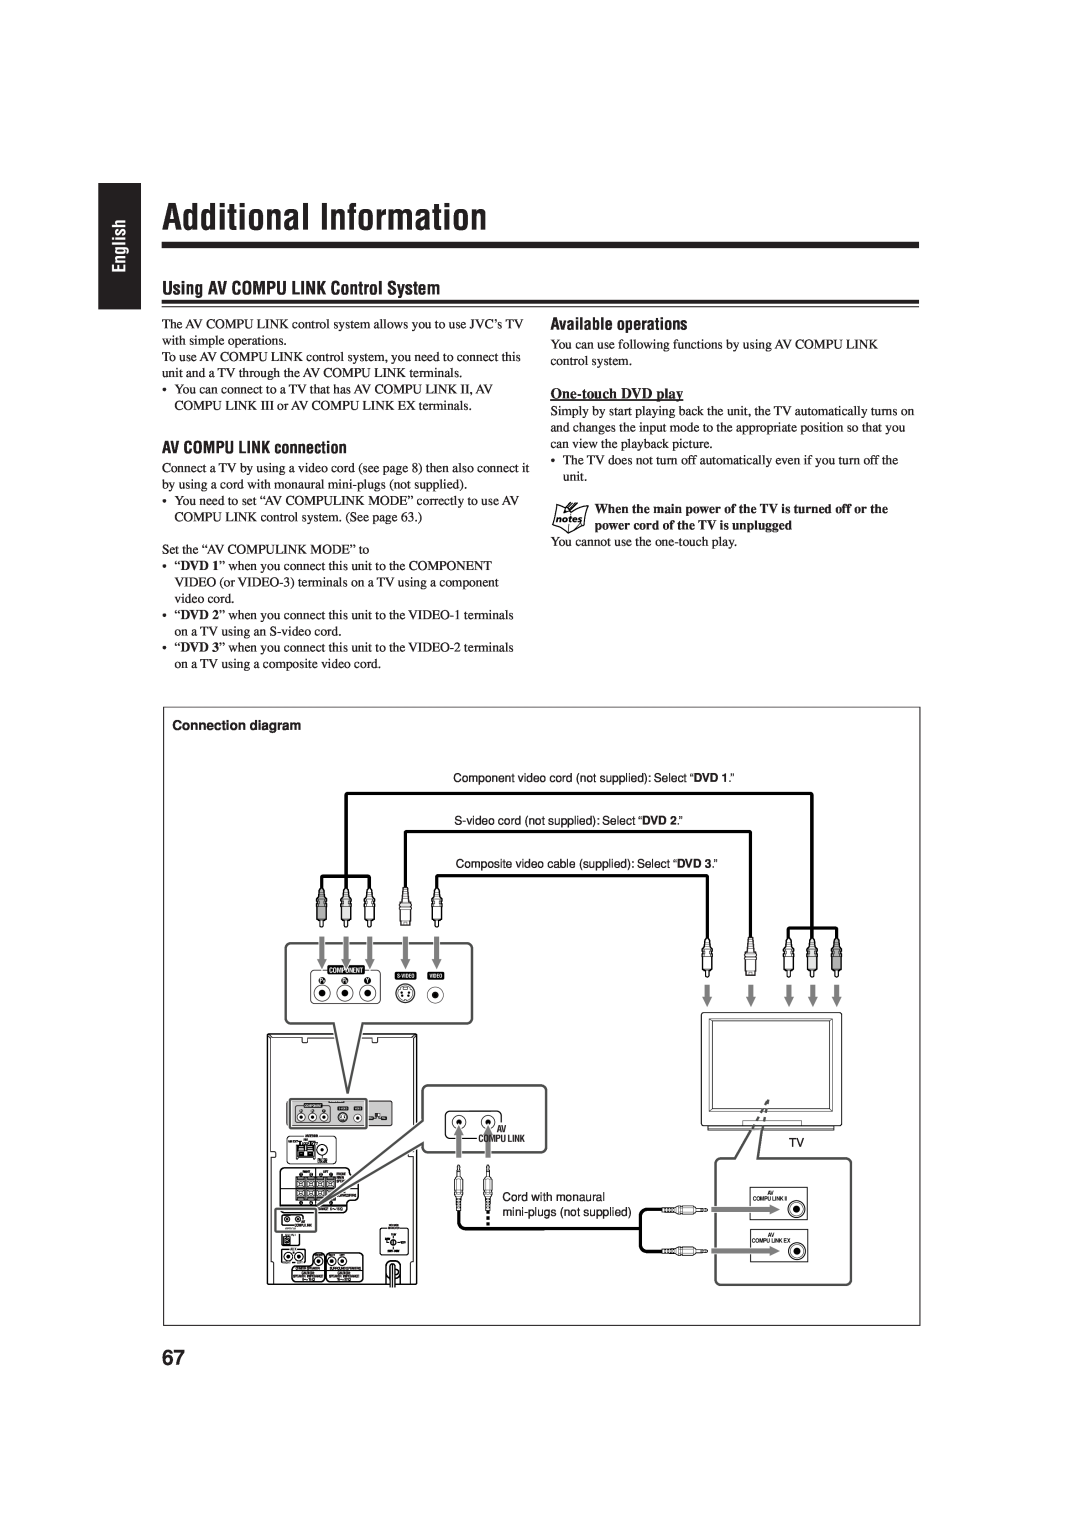 JVC GVT0119-001C, CA-HXZ77D Additional Information, Using AV COMPU LINK Control System, AV COMPU LINK connection, English 